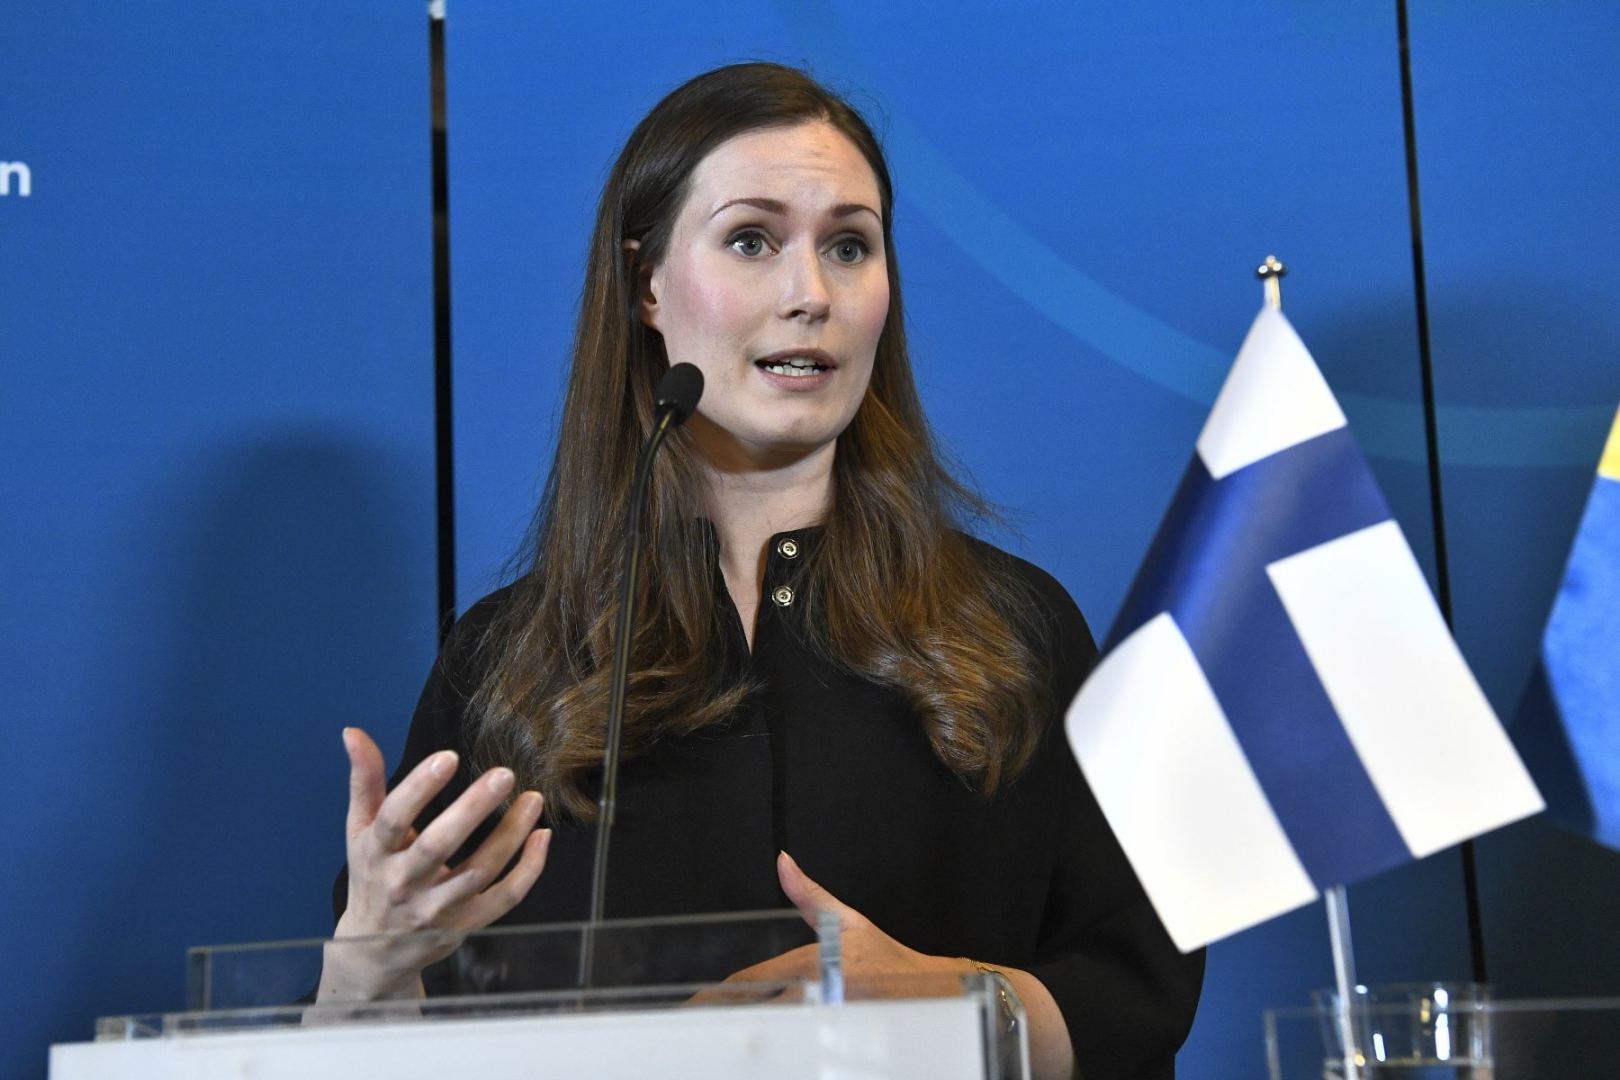 Finland's Prime Minister says COVID test negative